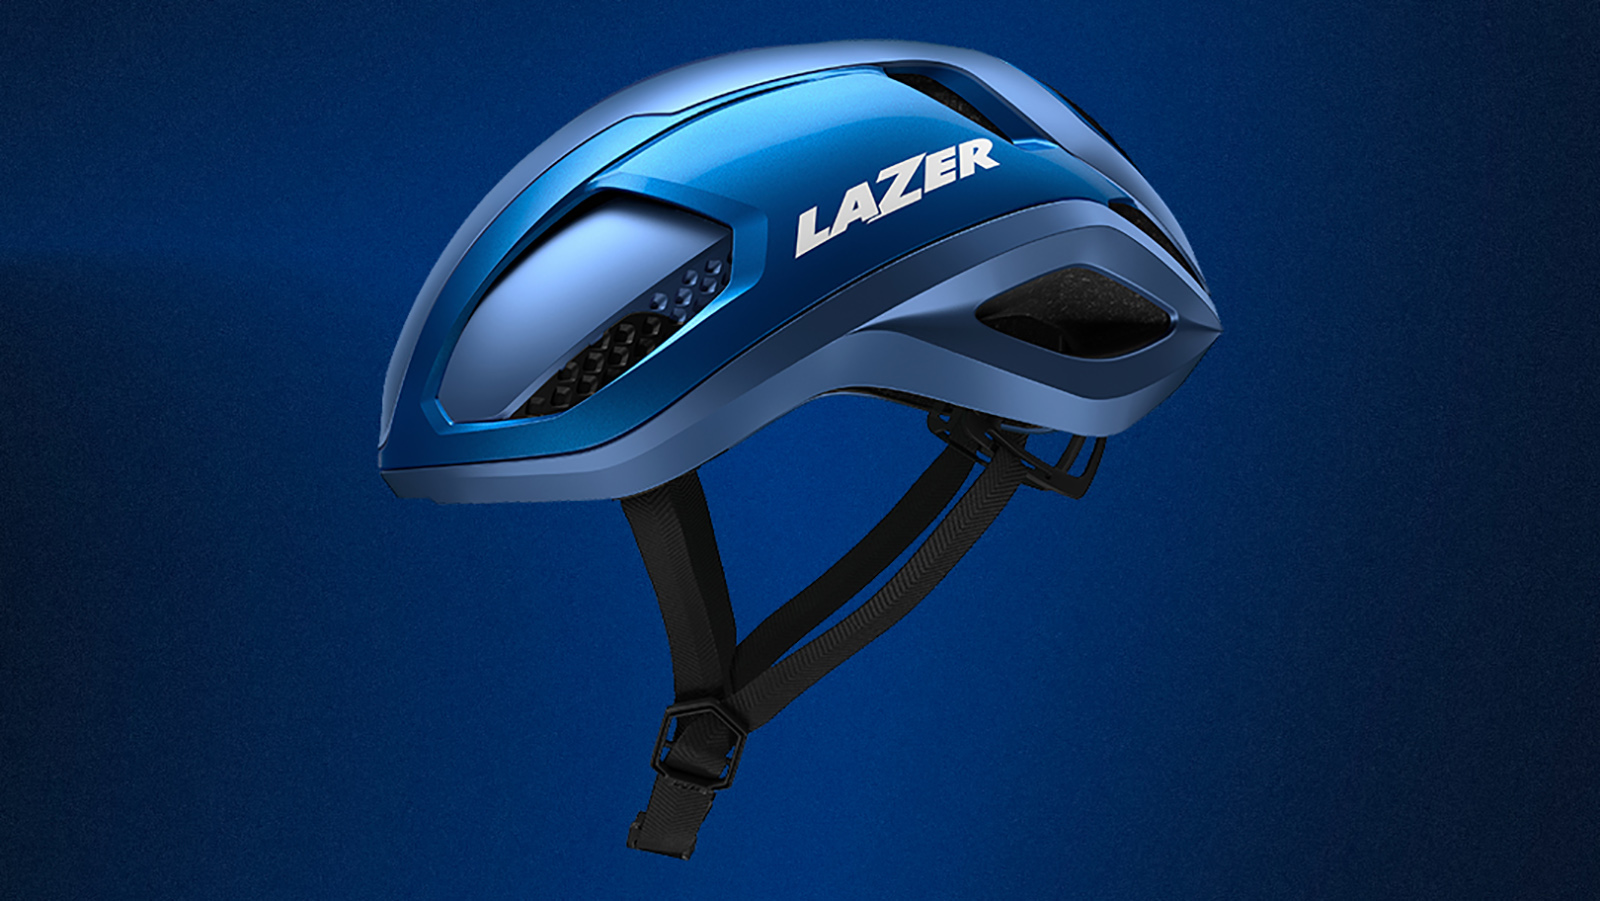 Lazer & Wout van Aert Team Up for First-Ever Red Bull-Branded Helmet ...